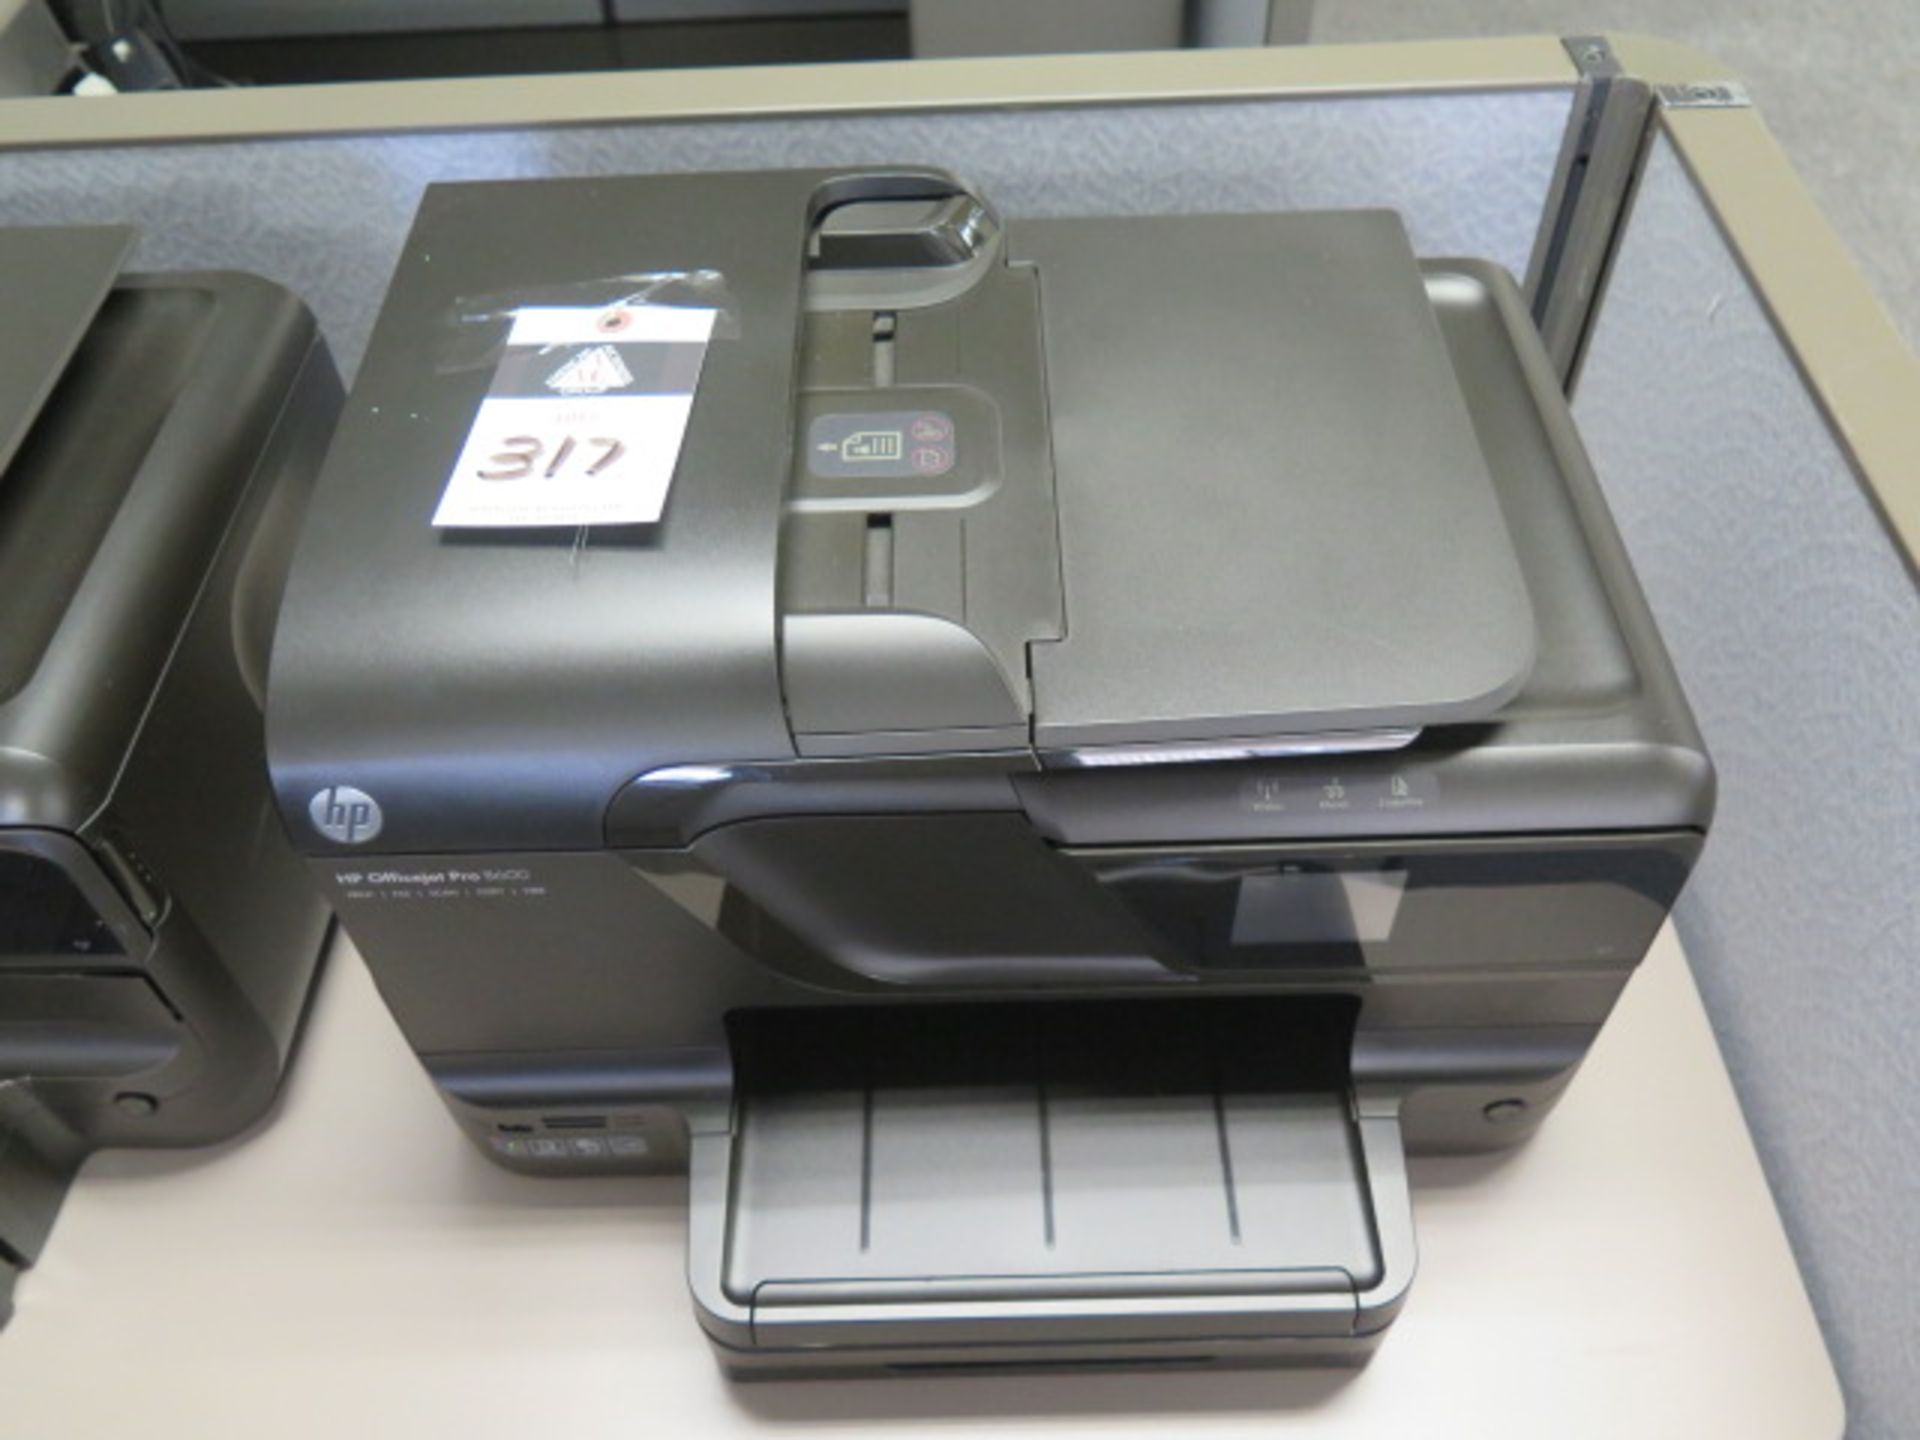 HP Officejet PRO 8600 Prinf/Scan/Copy Machine